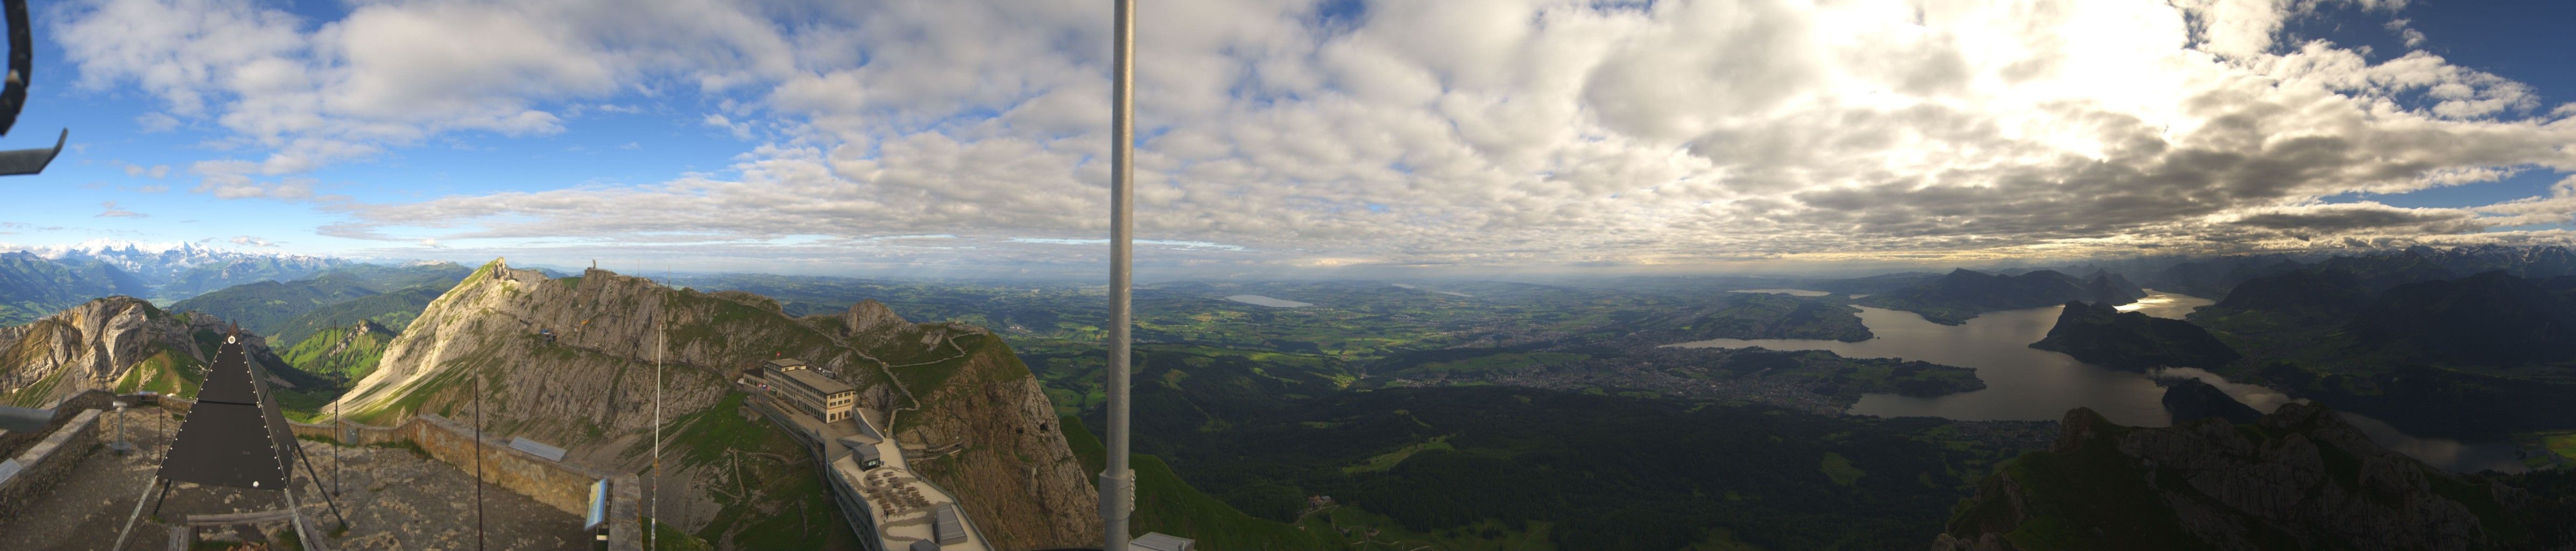 Alpnach: Pilatus Kulm - Bürgenstock - Lucerne - Vierwaldstättersee - Rigi Kulm